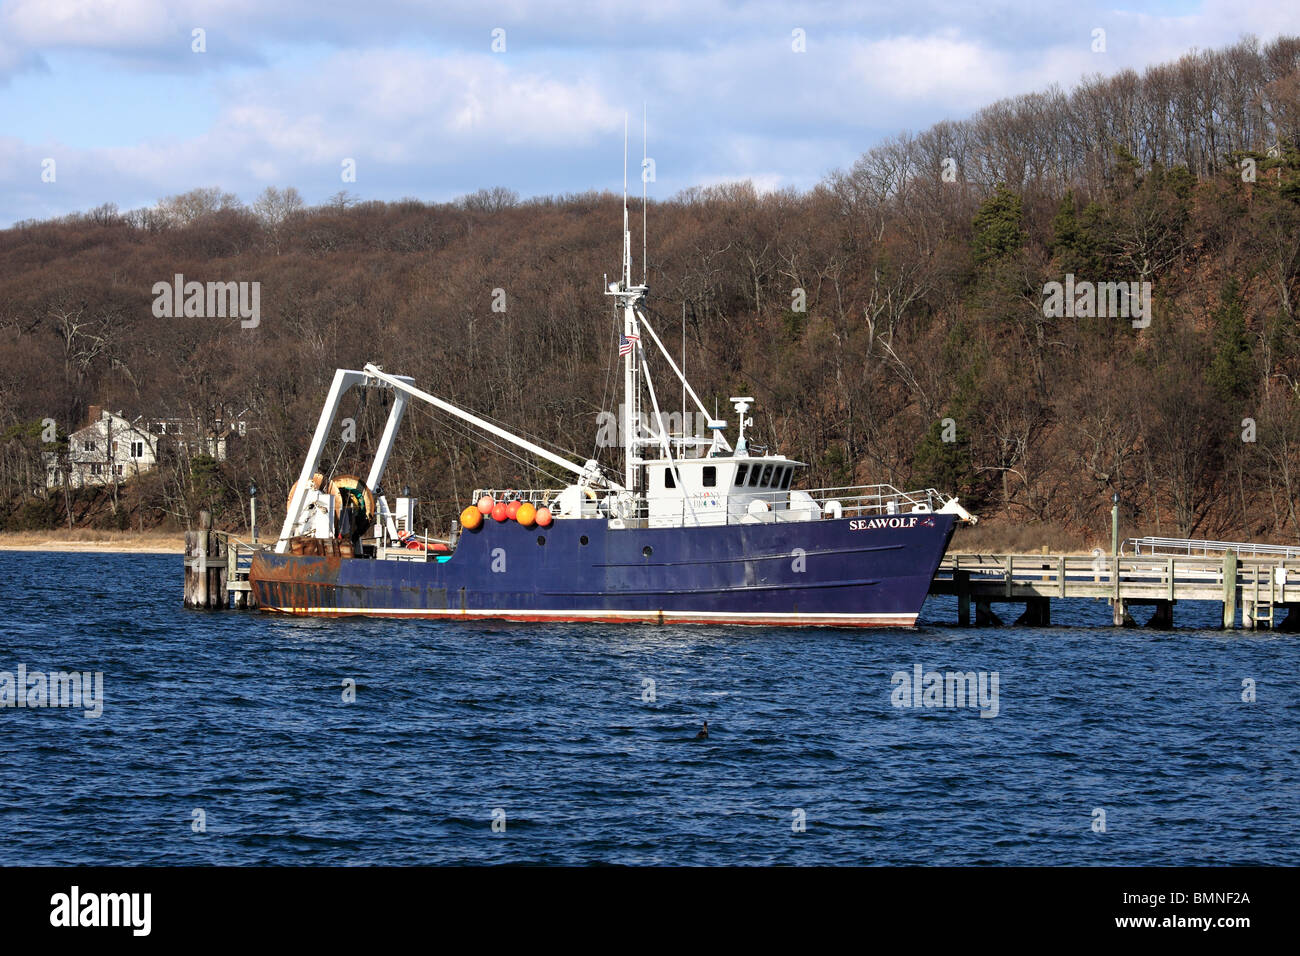 The 'Seawolf' maritime research vessel used by the Stony Brook University marine biology program, Port Jefferson Long Island, NY Stock Photo